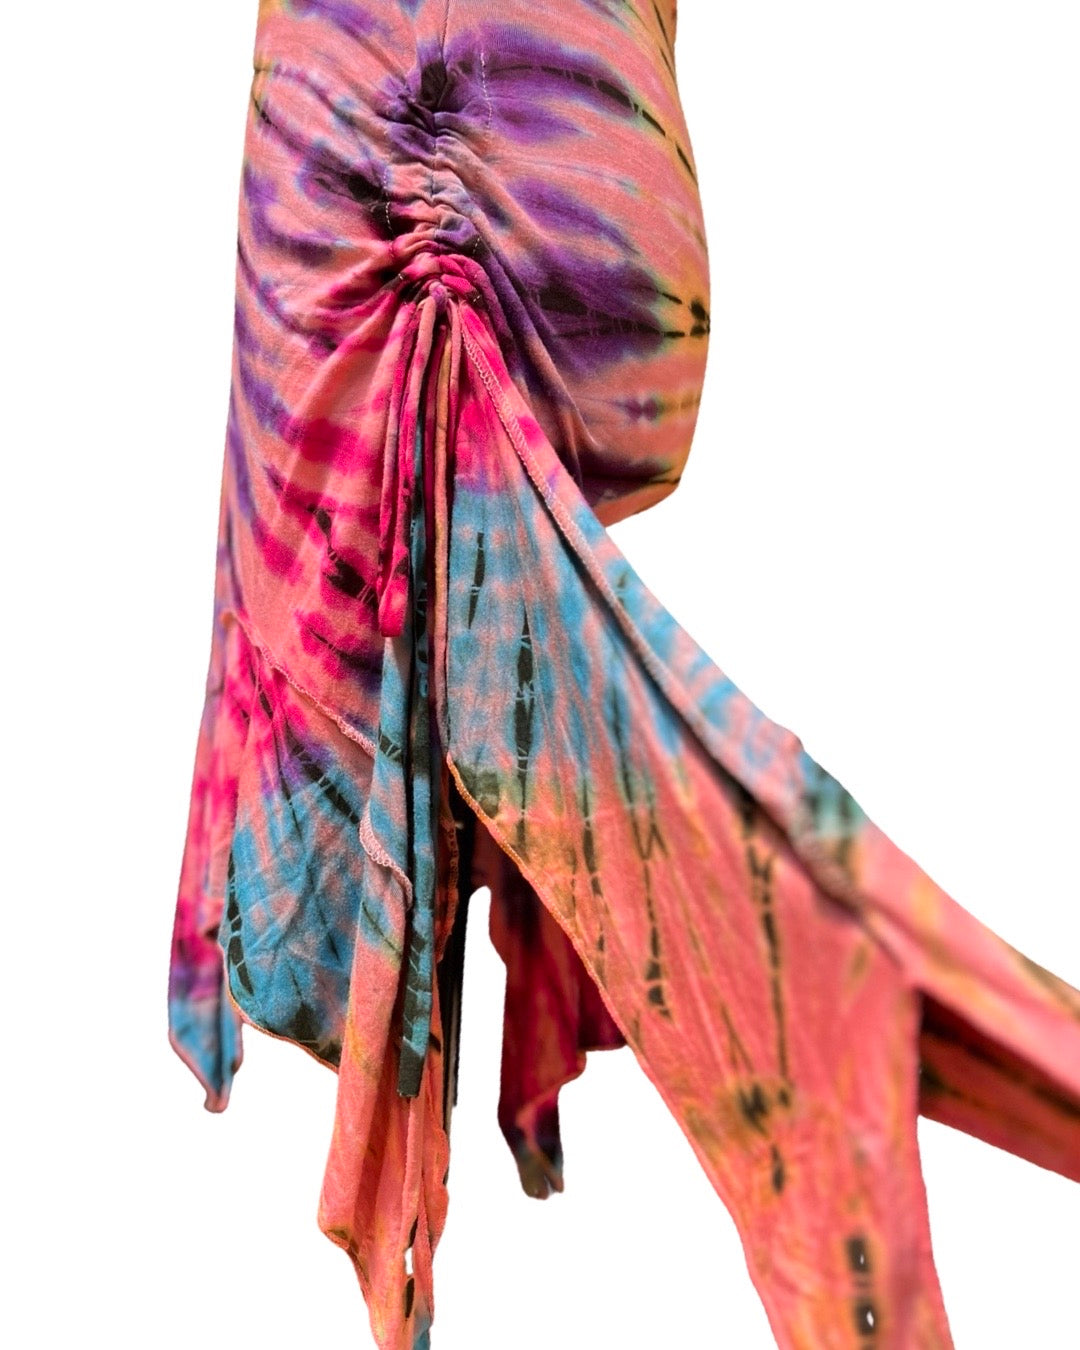 Pink Rainbow Tie Dye Pixie Dress (Small Only)